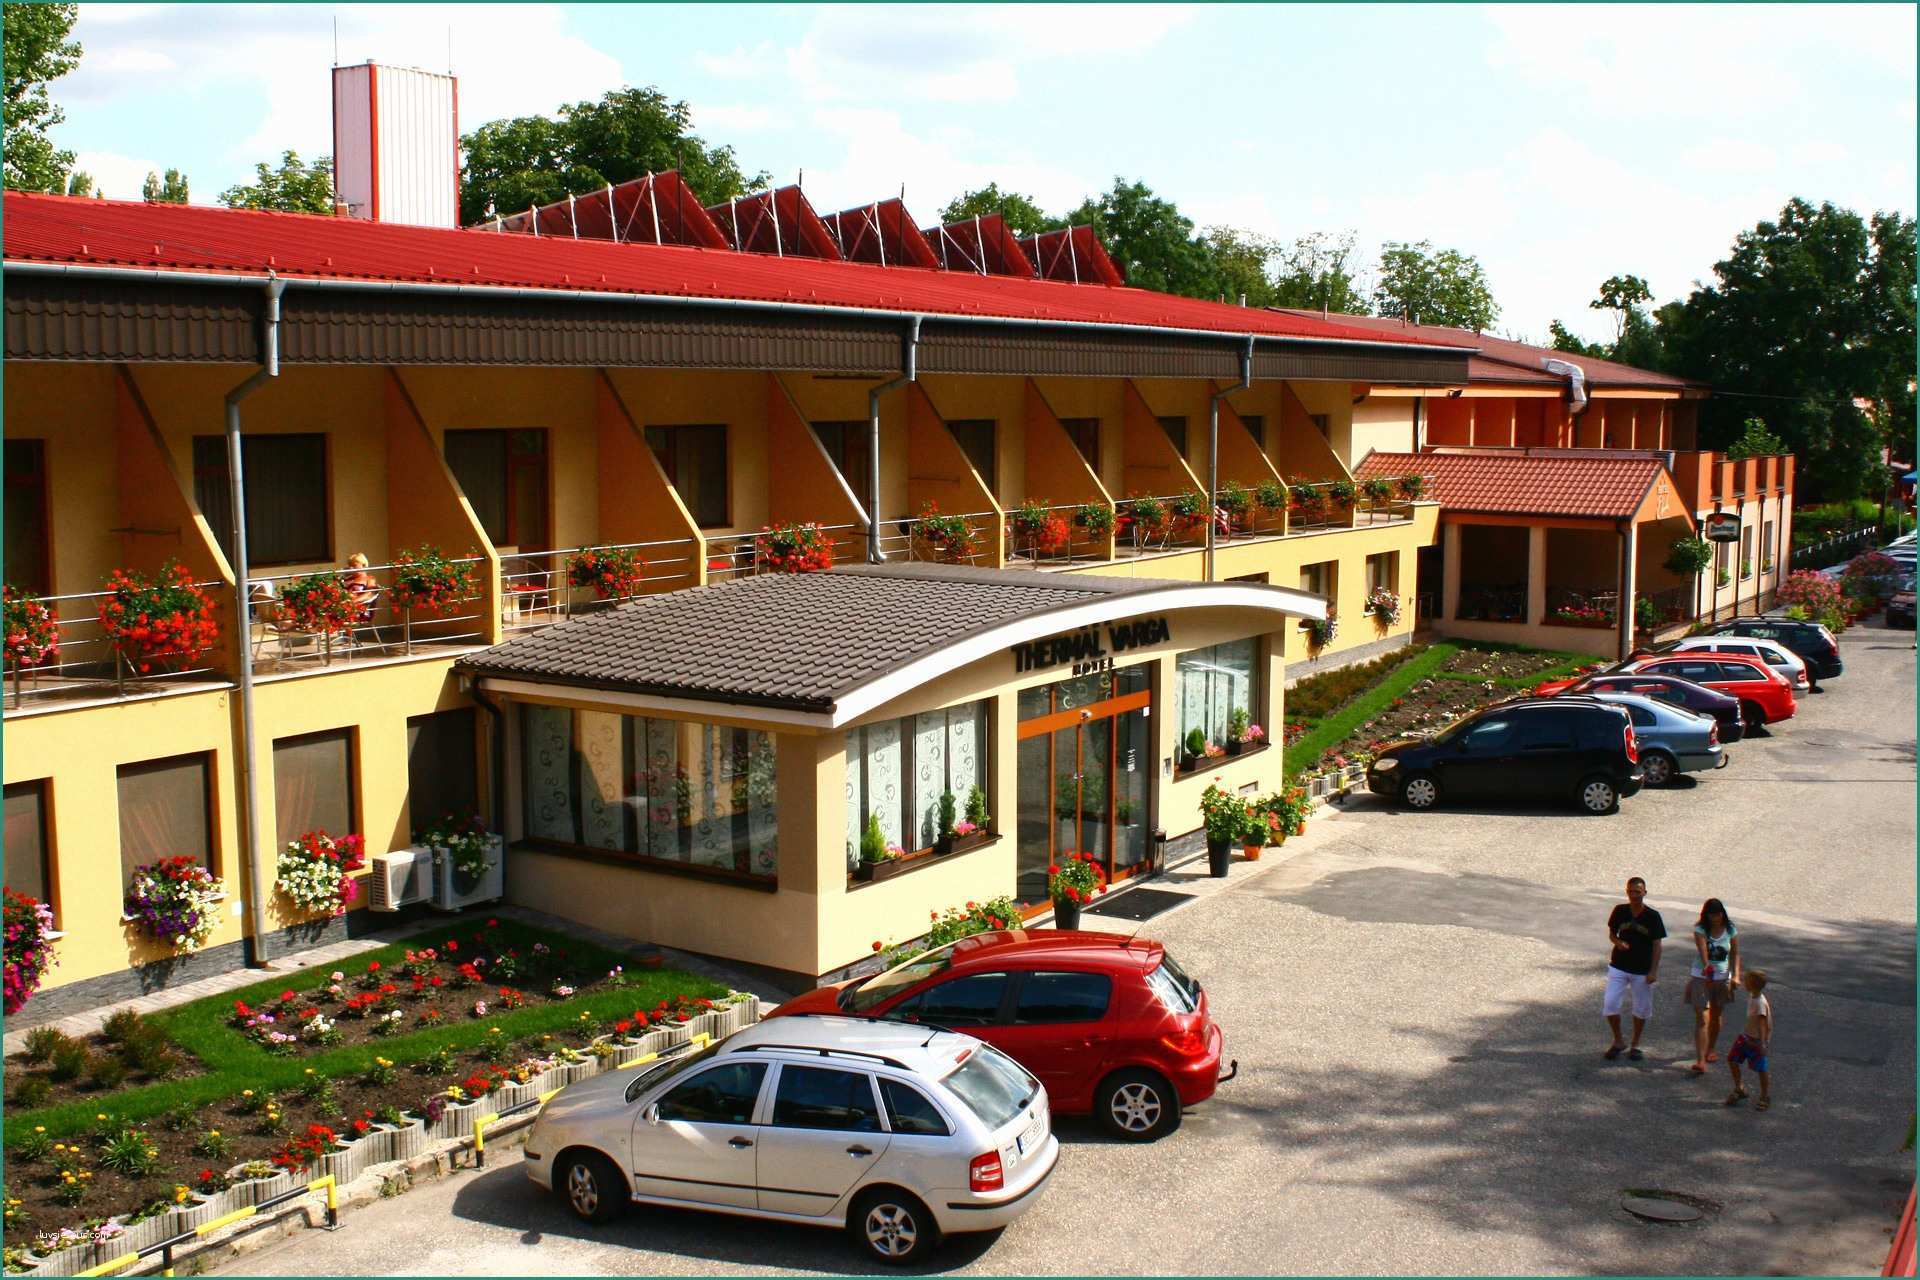 Hotel Altis San Benedetto E Dovolená V Chorvatsku A Itálii S Renytravel